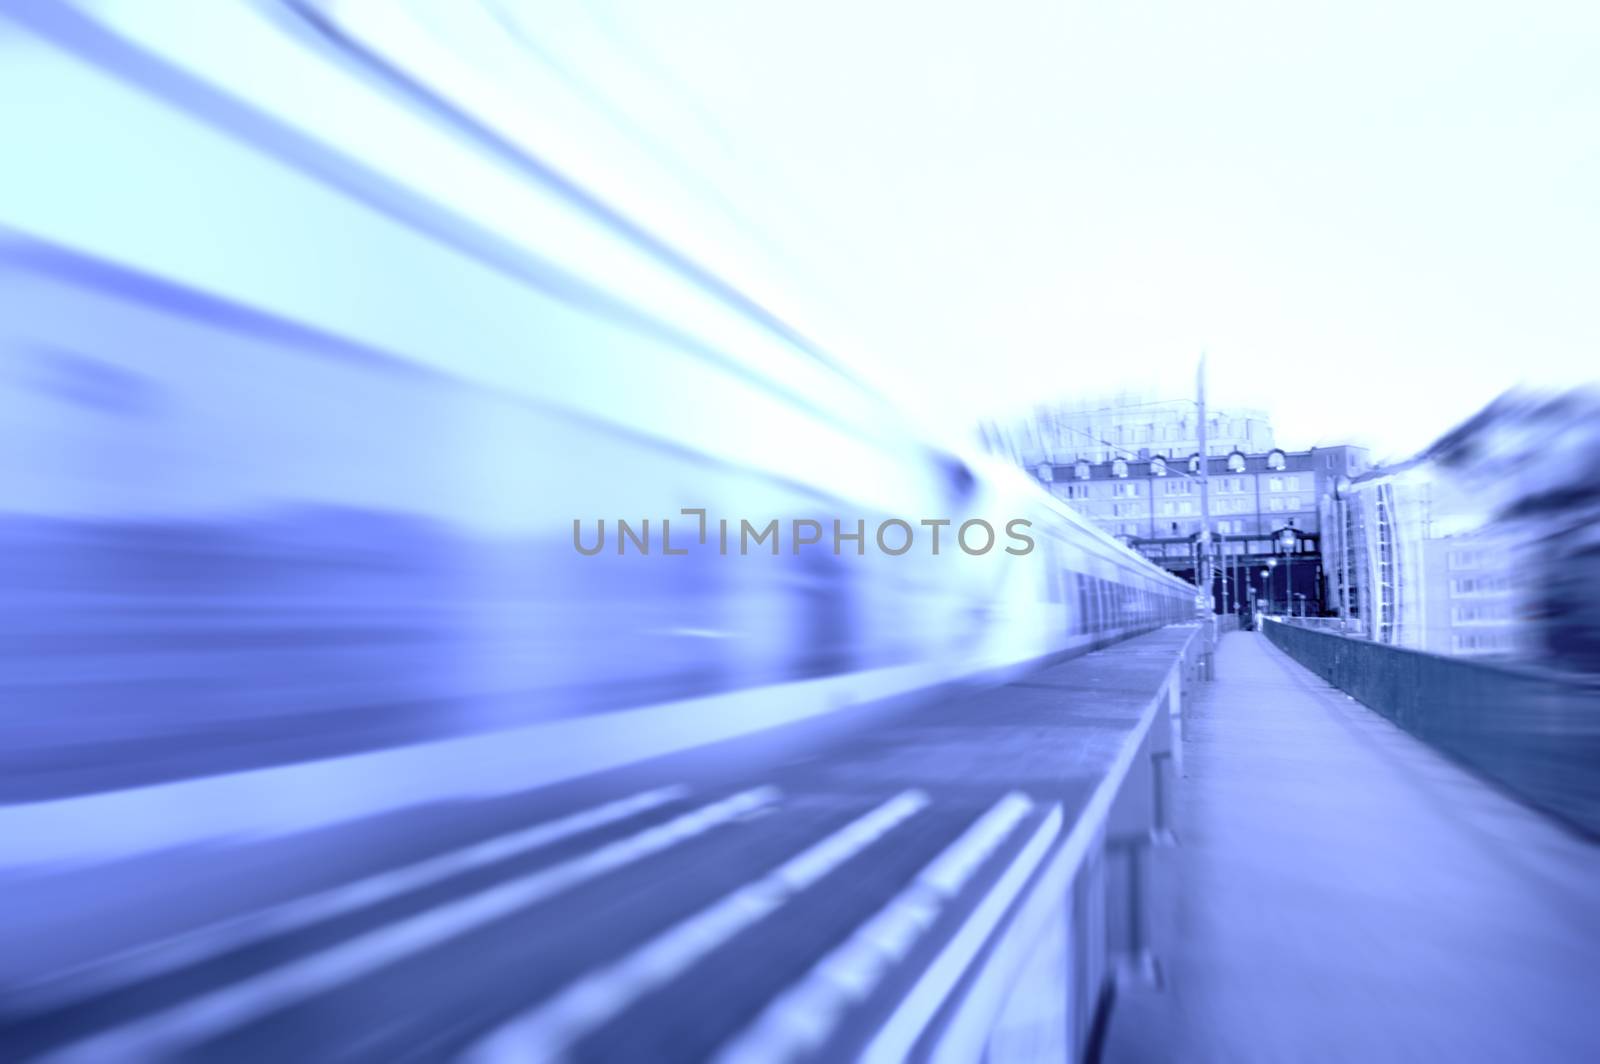 Transportation conceptual image. A speeding train on rails. Motion blur picture.